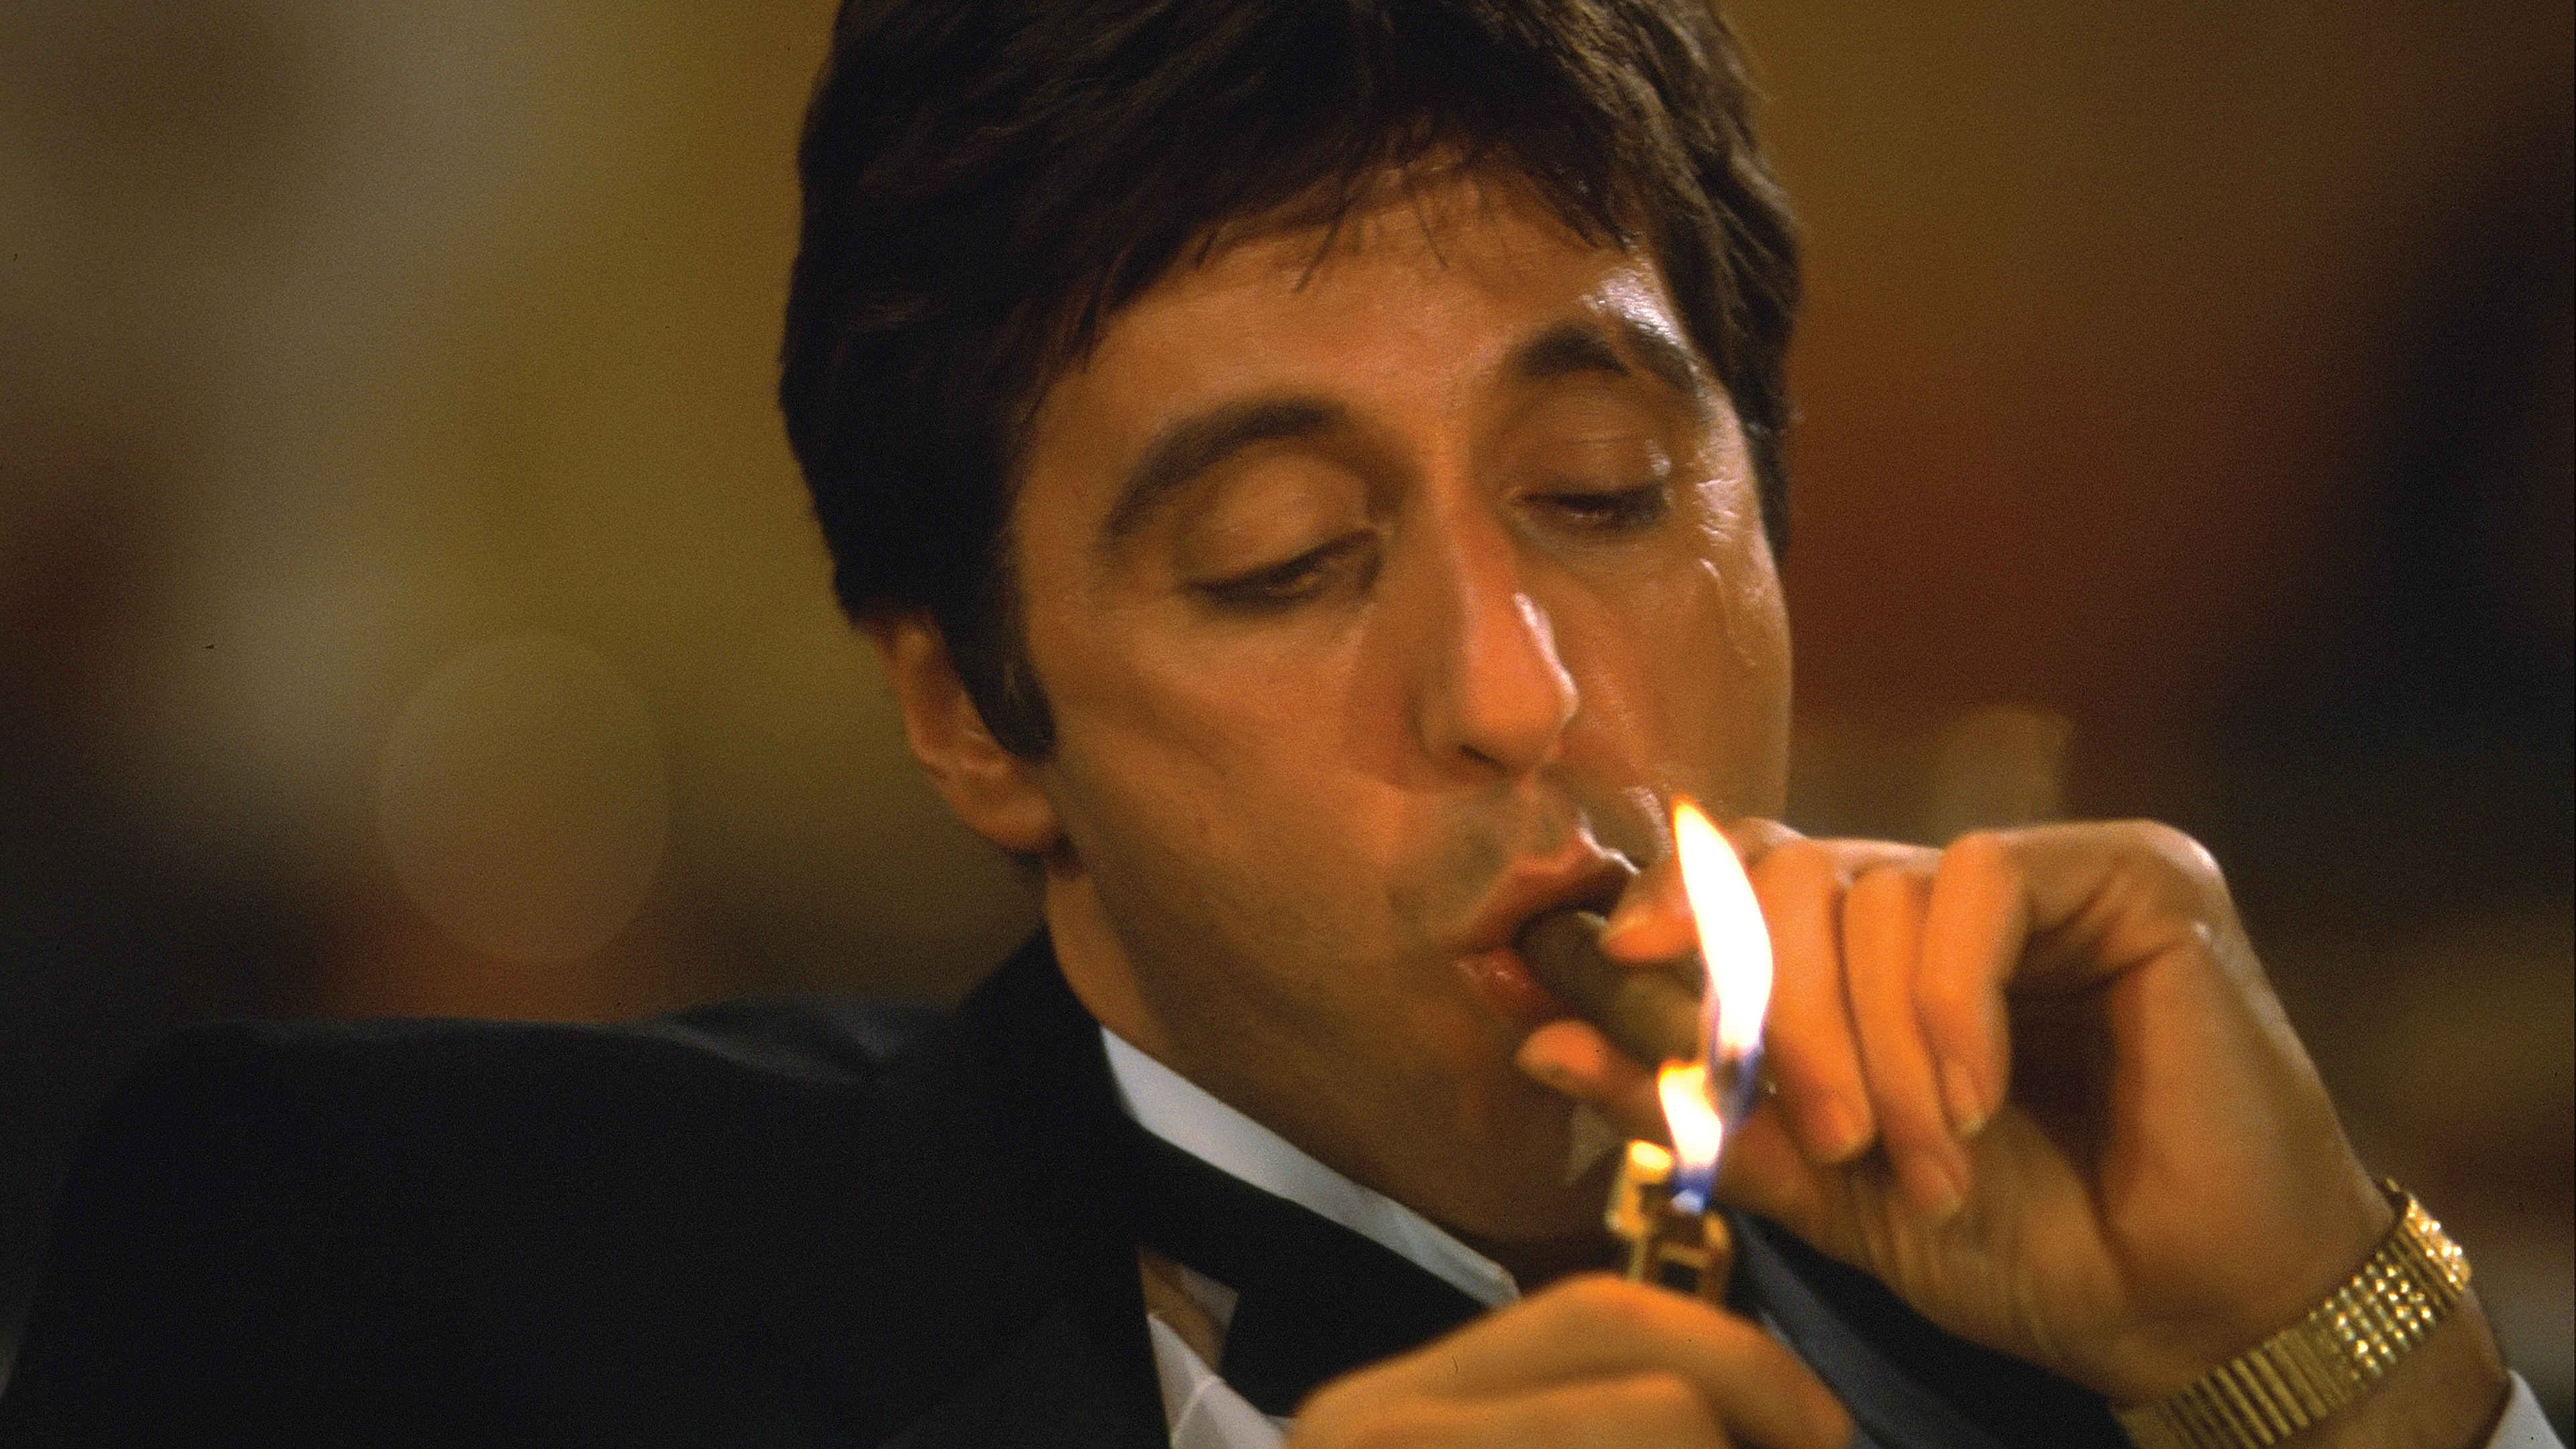 Tony Montana Smoking for 3840 x 2160 Ultra HD resolution